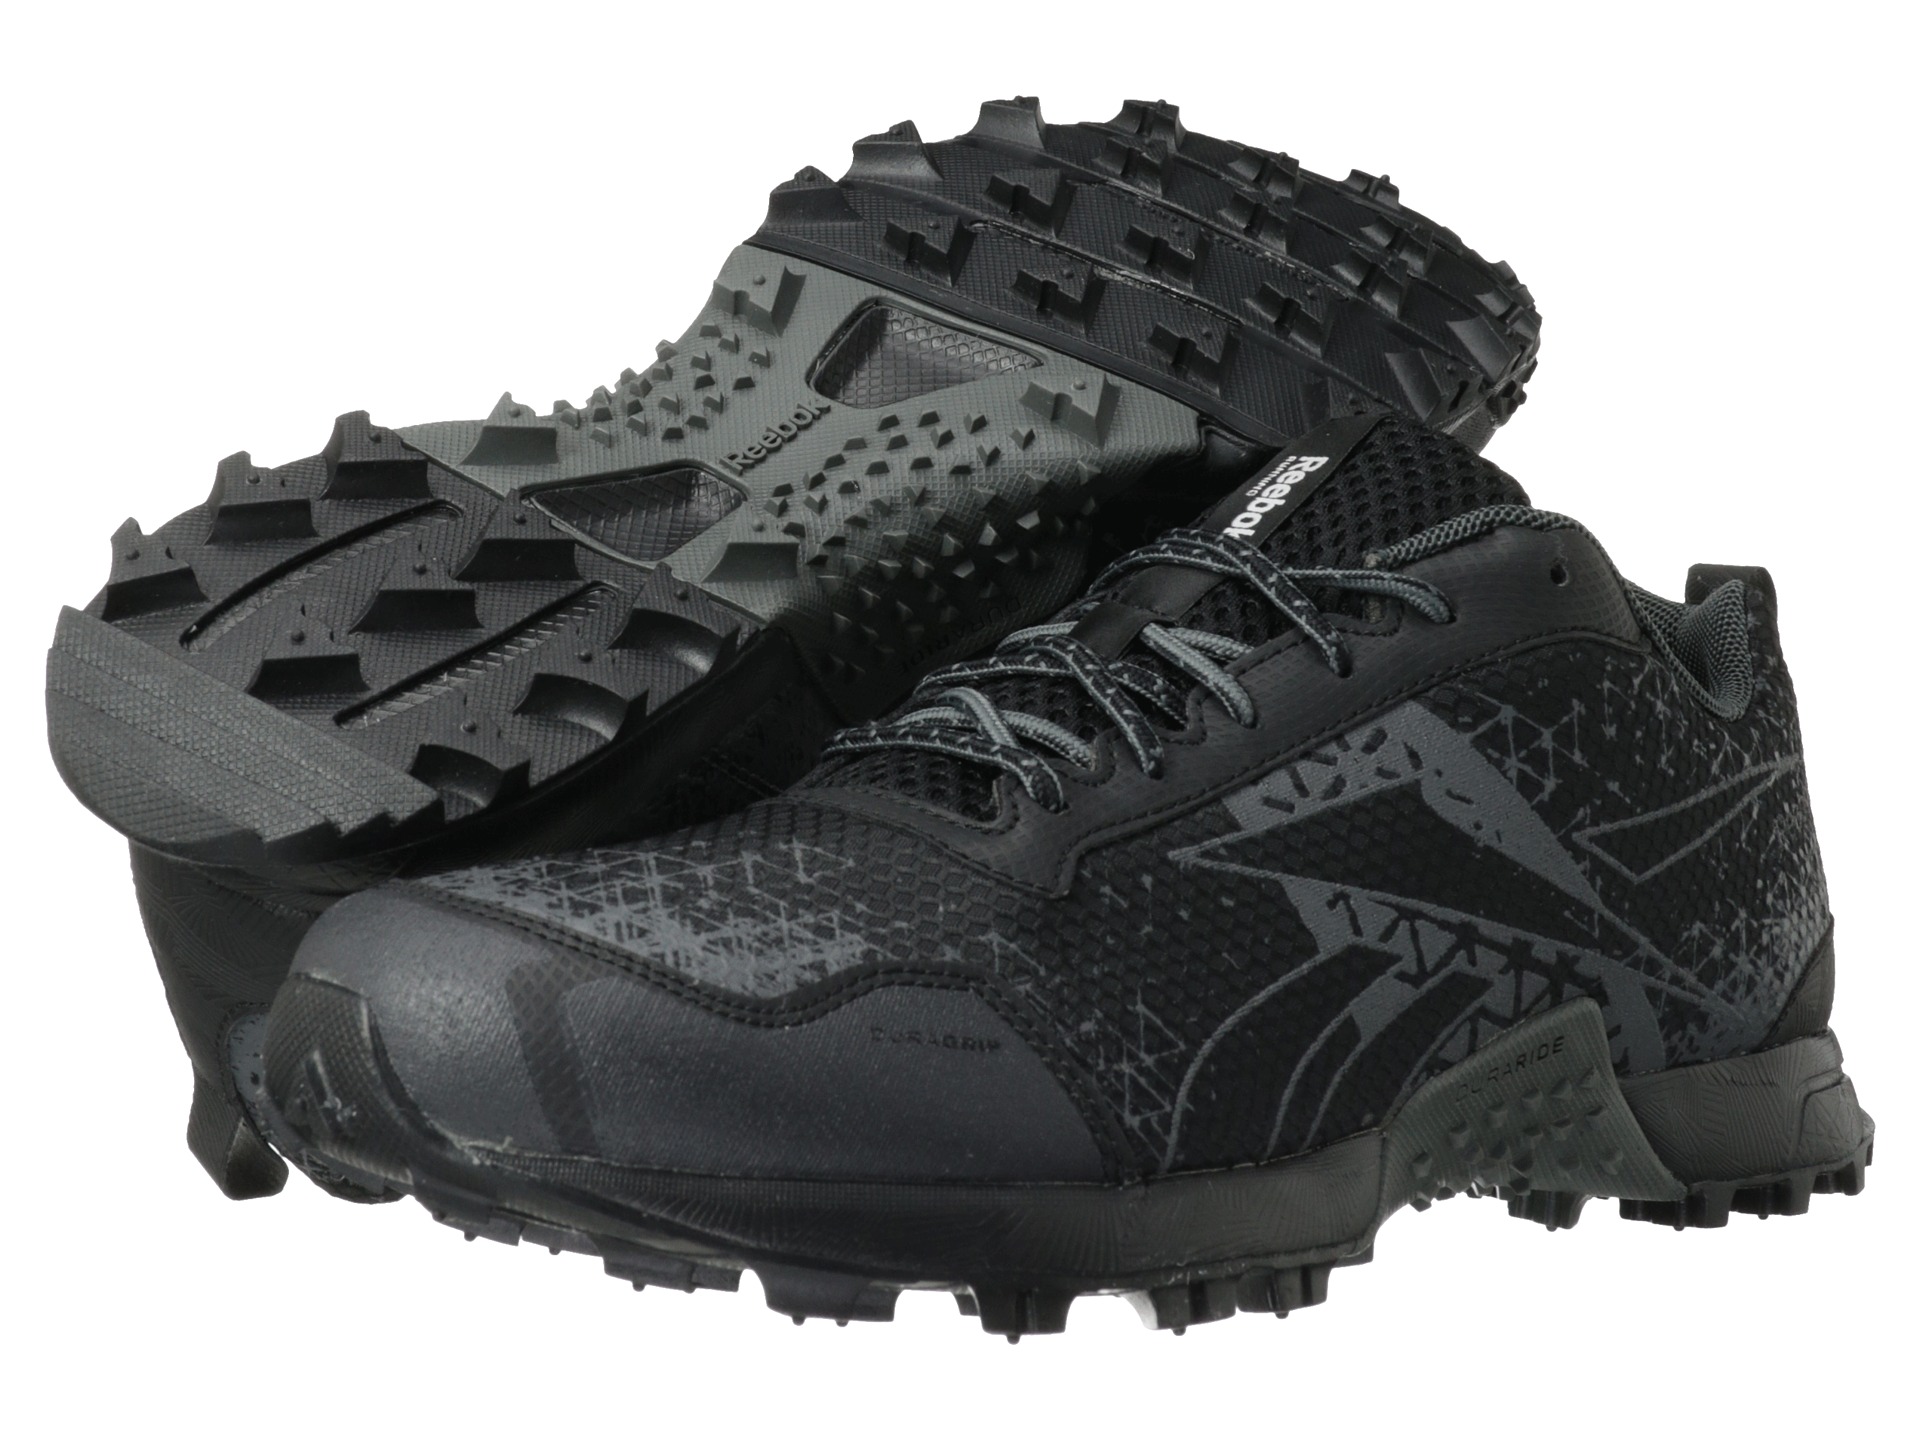 black nubuck timberland boots